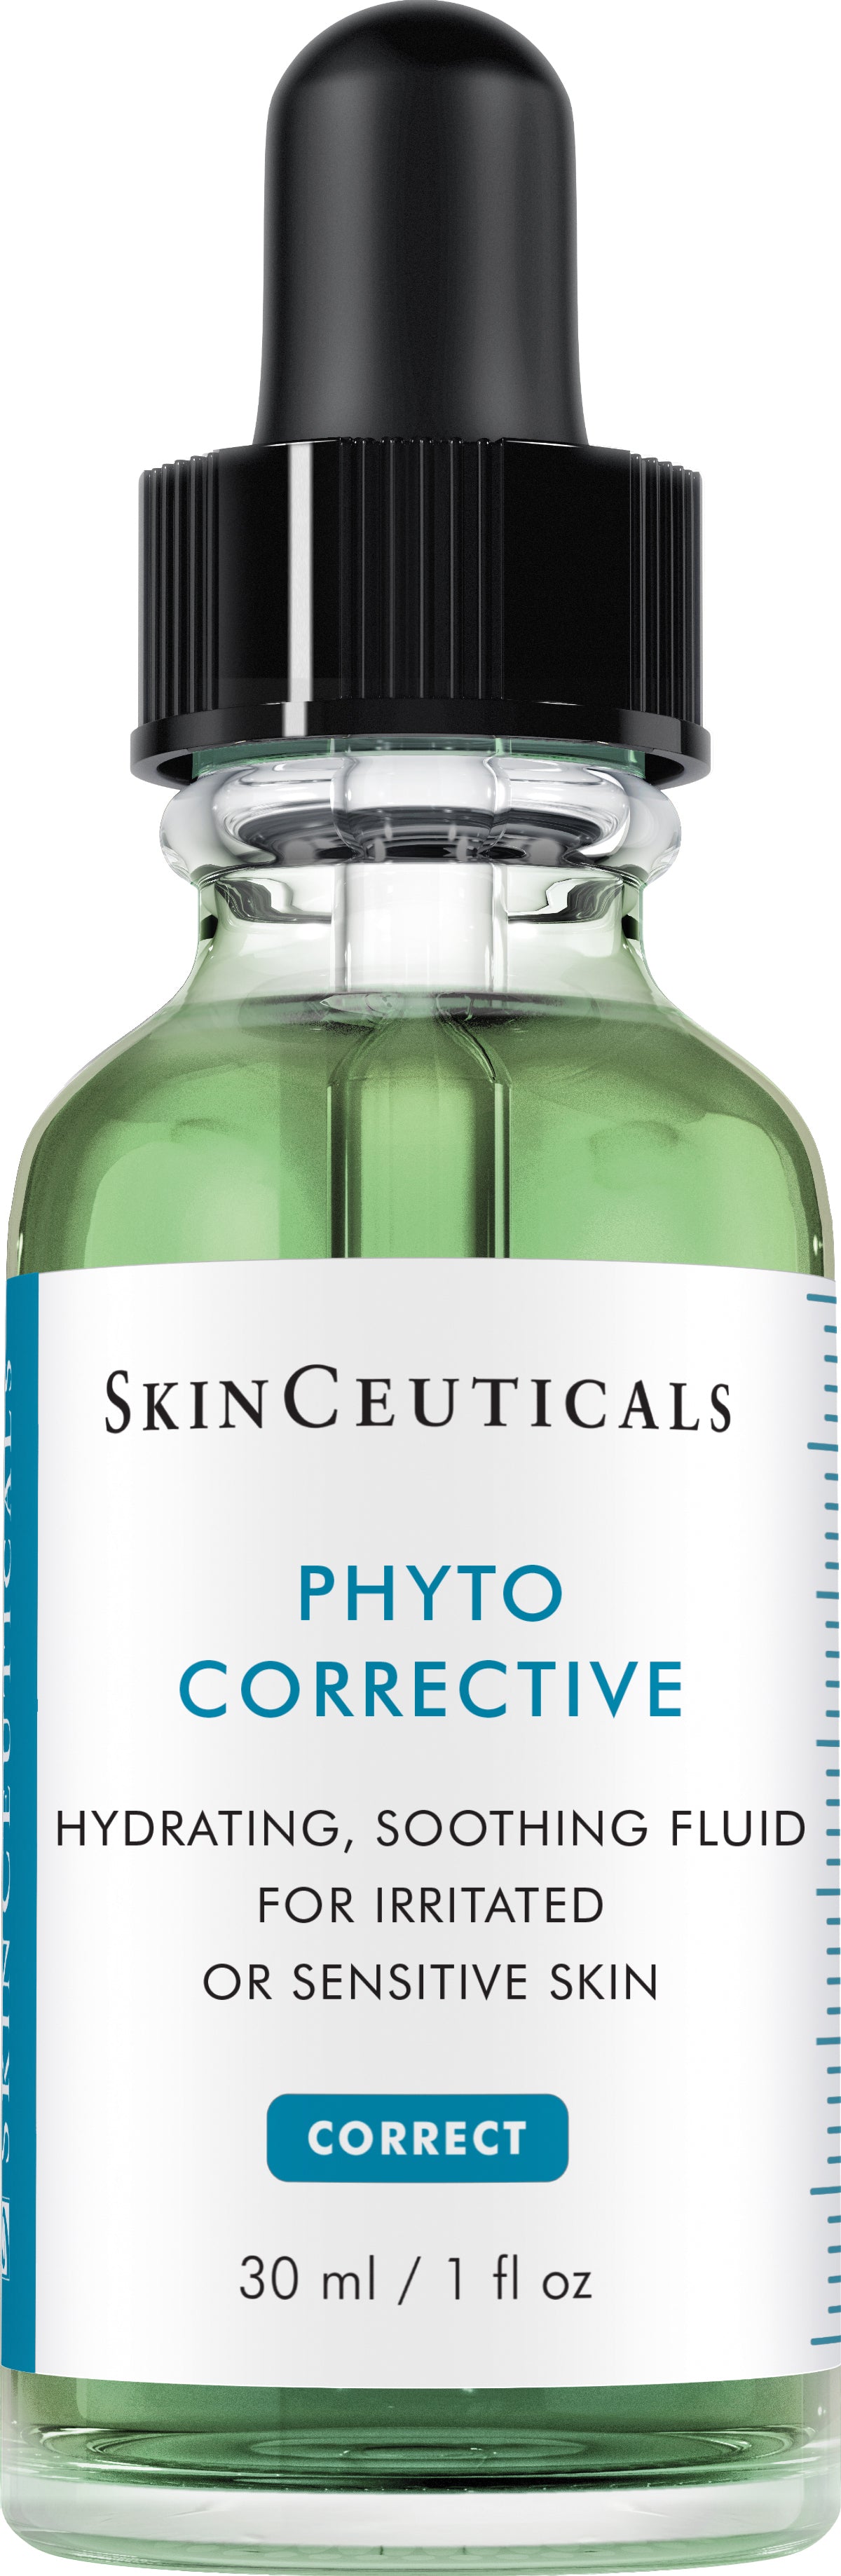 Phyto Corrective 30ml